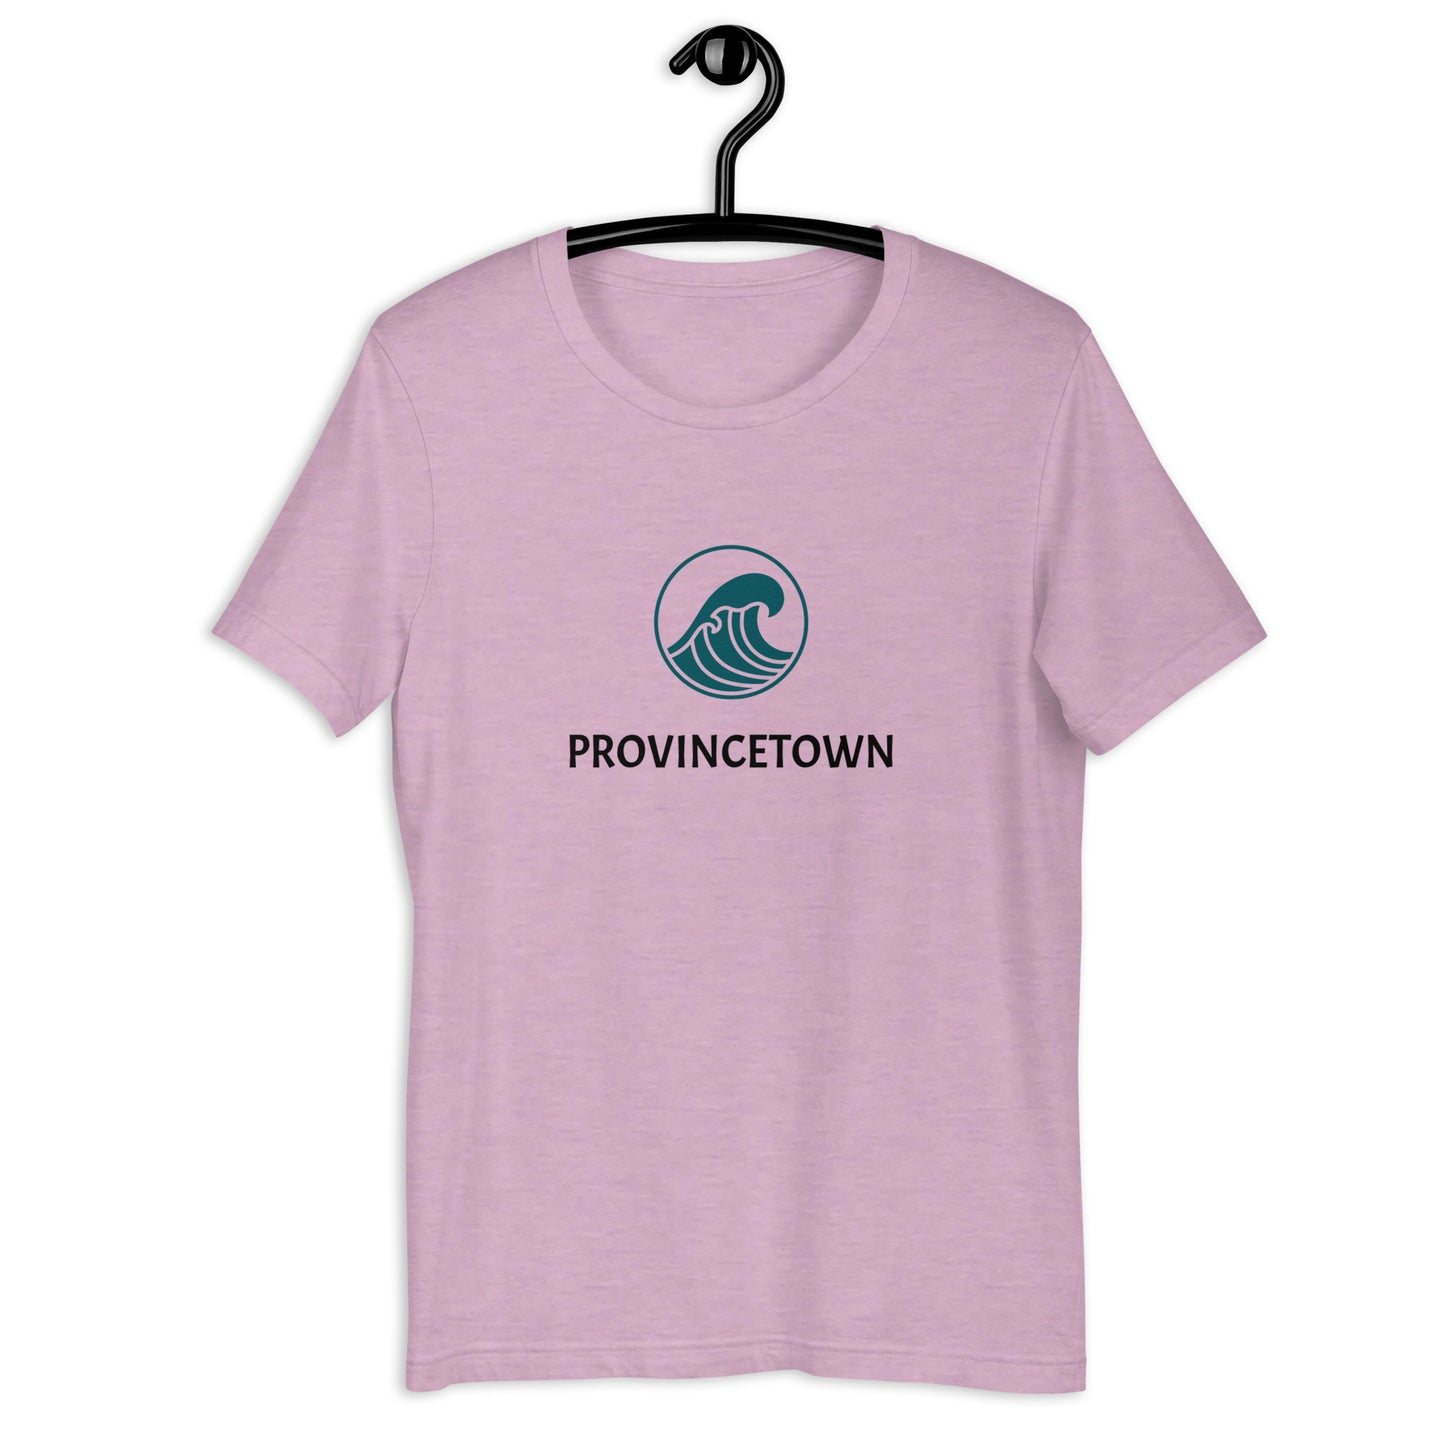 Provinctown unisex t-shirt